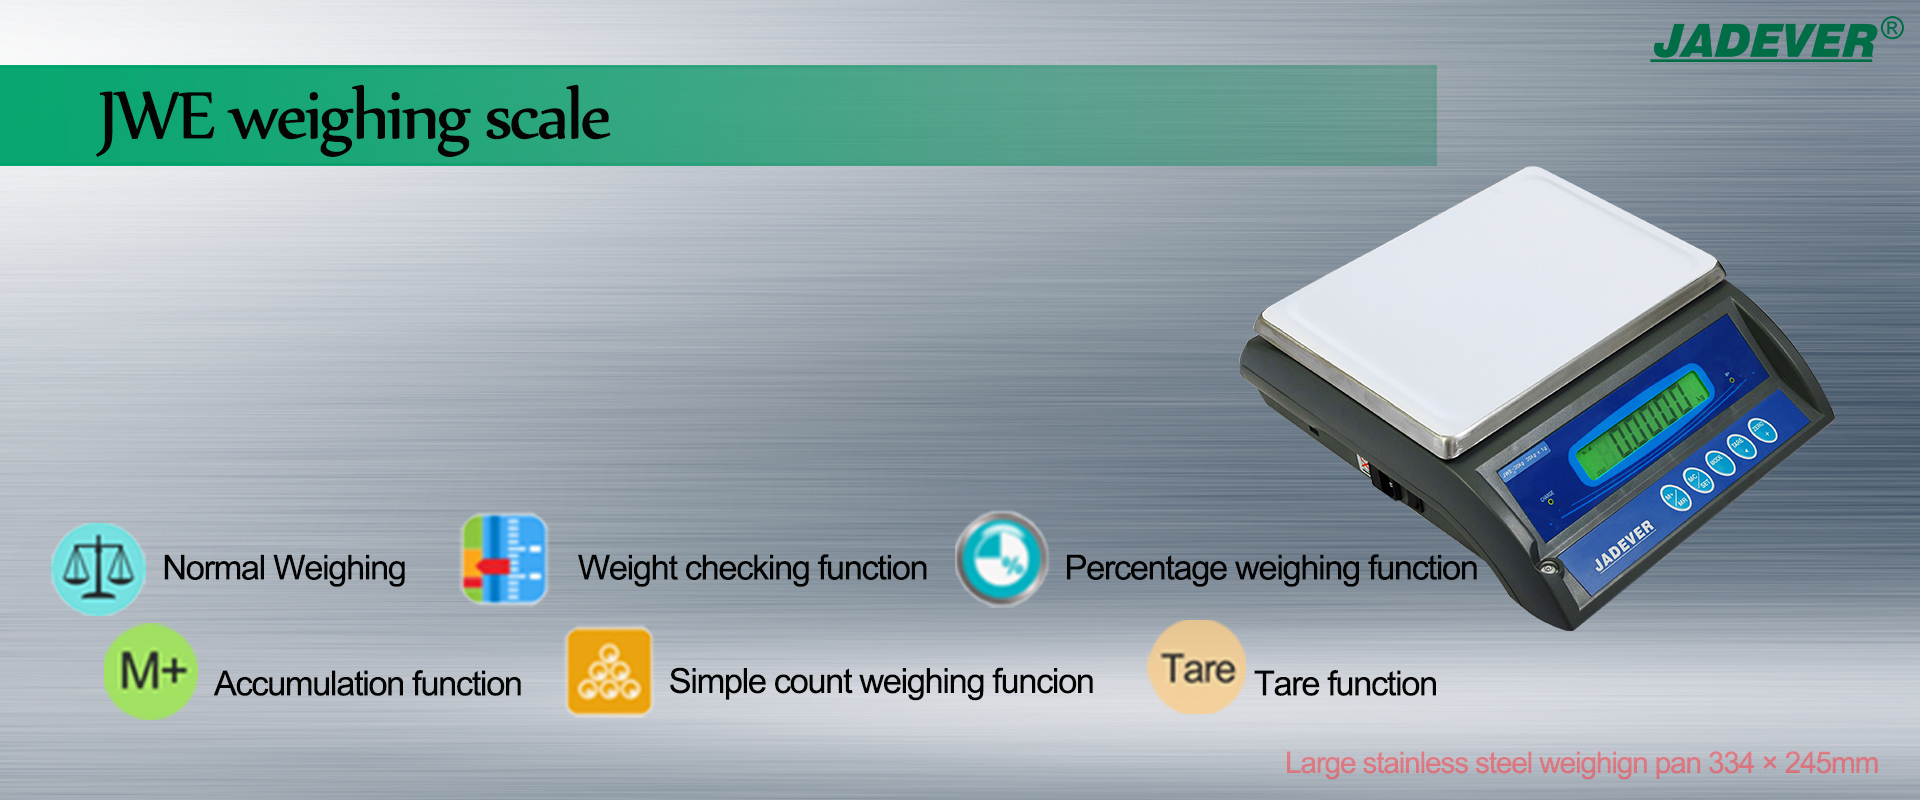 JWE weighing scale